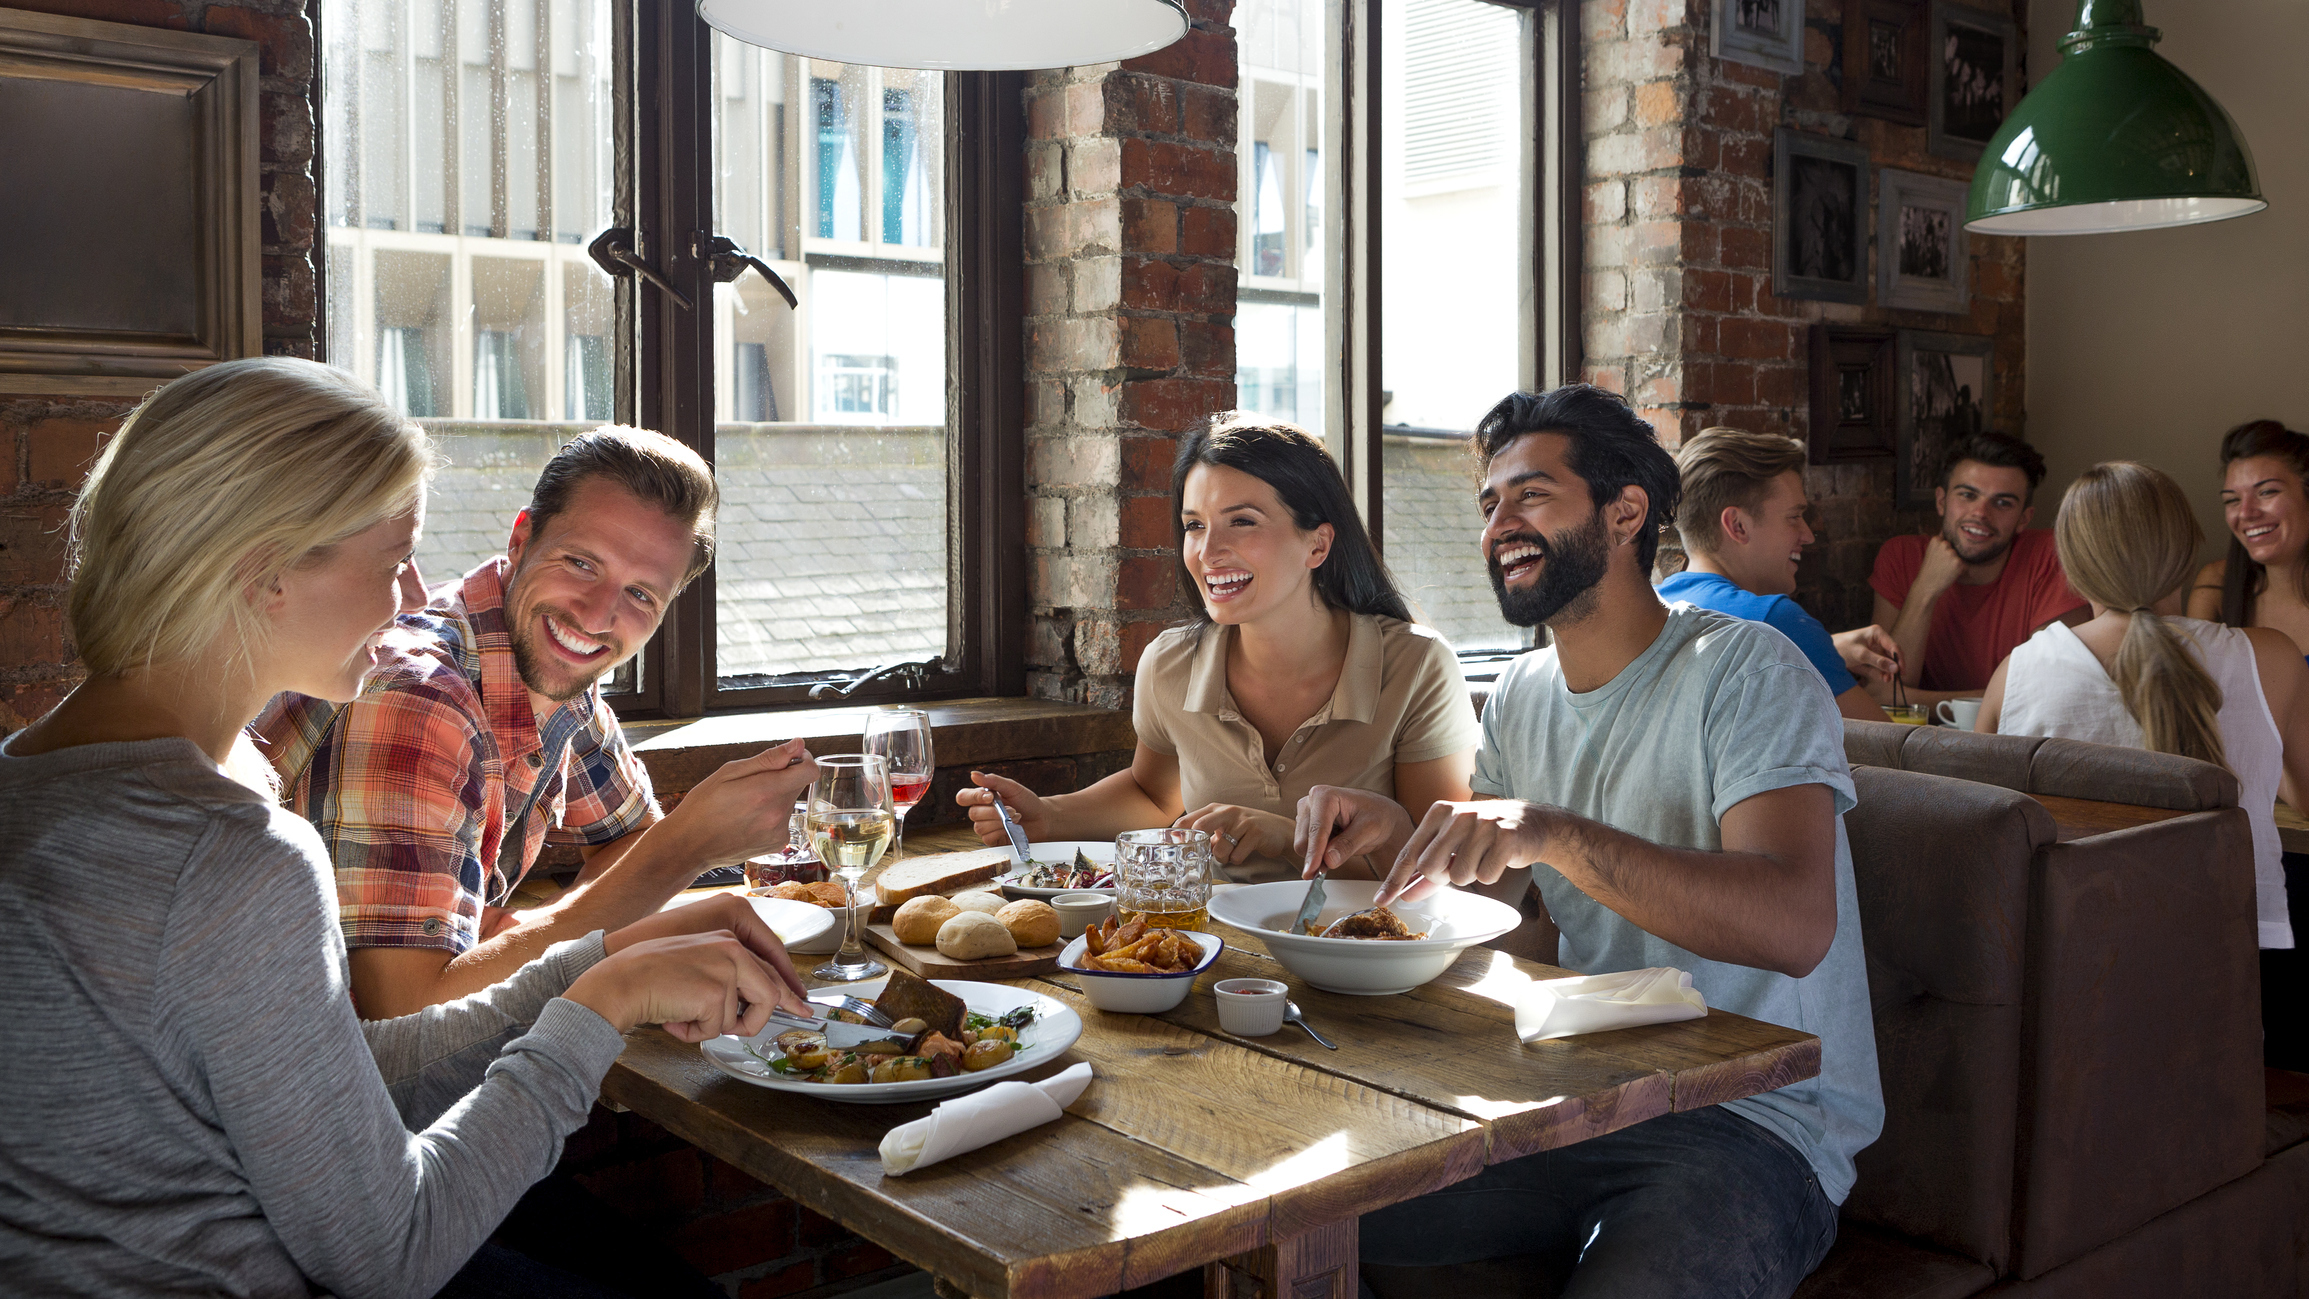 Essential Restaurant KPIs to Measure Customer Experience Success